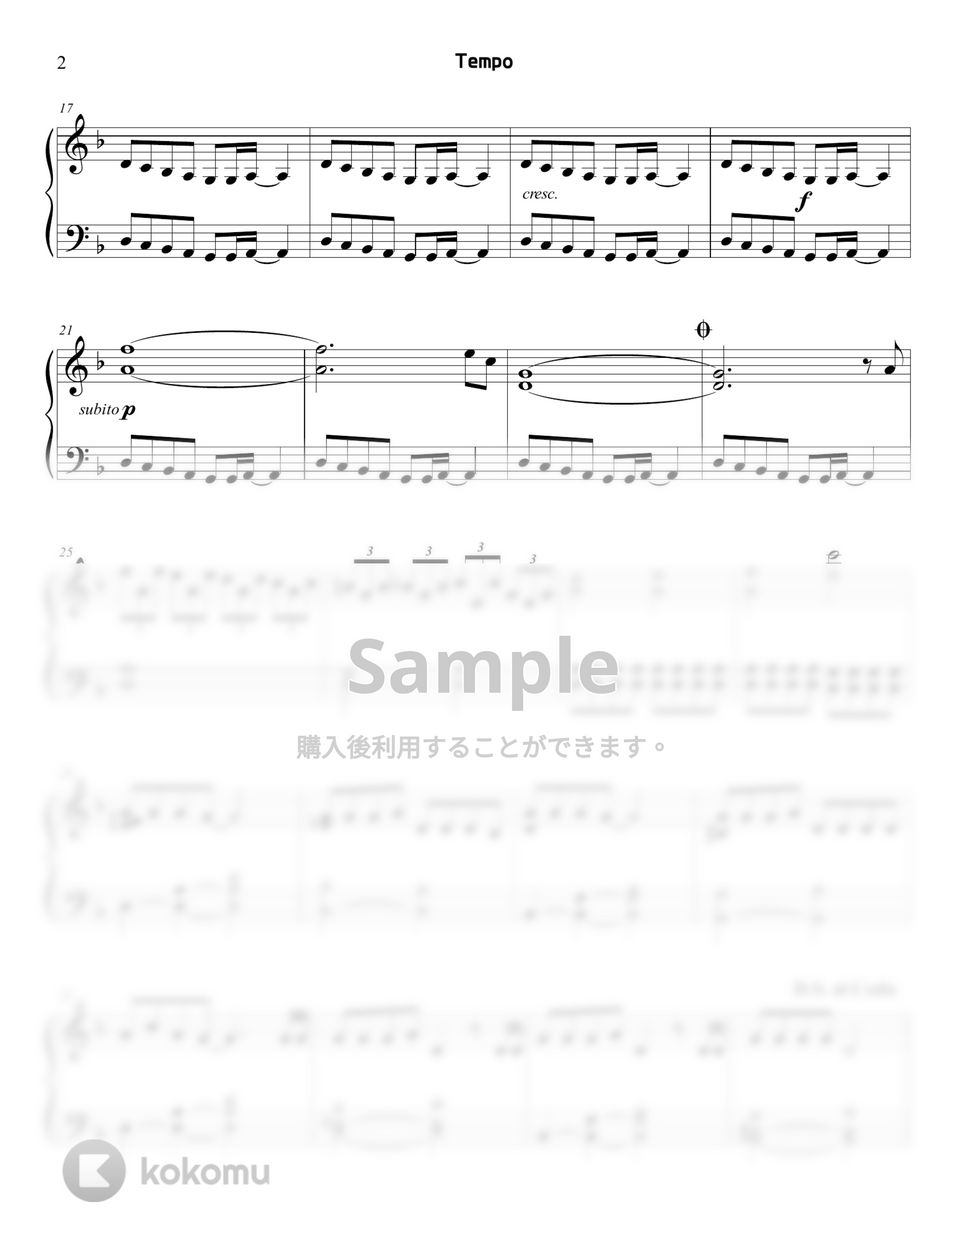 EXO - Tempo by Sunny Fingers Piano